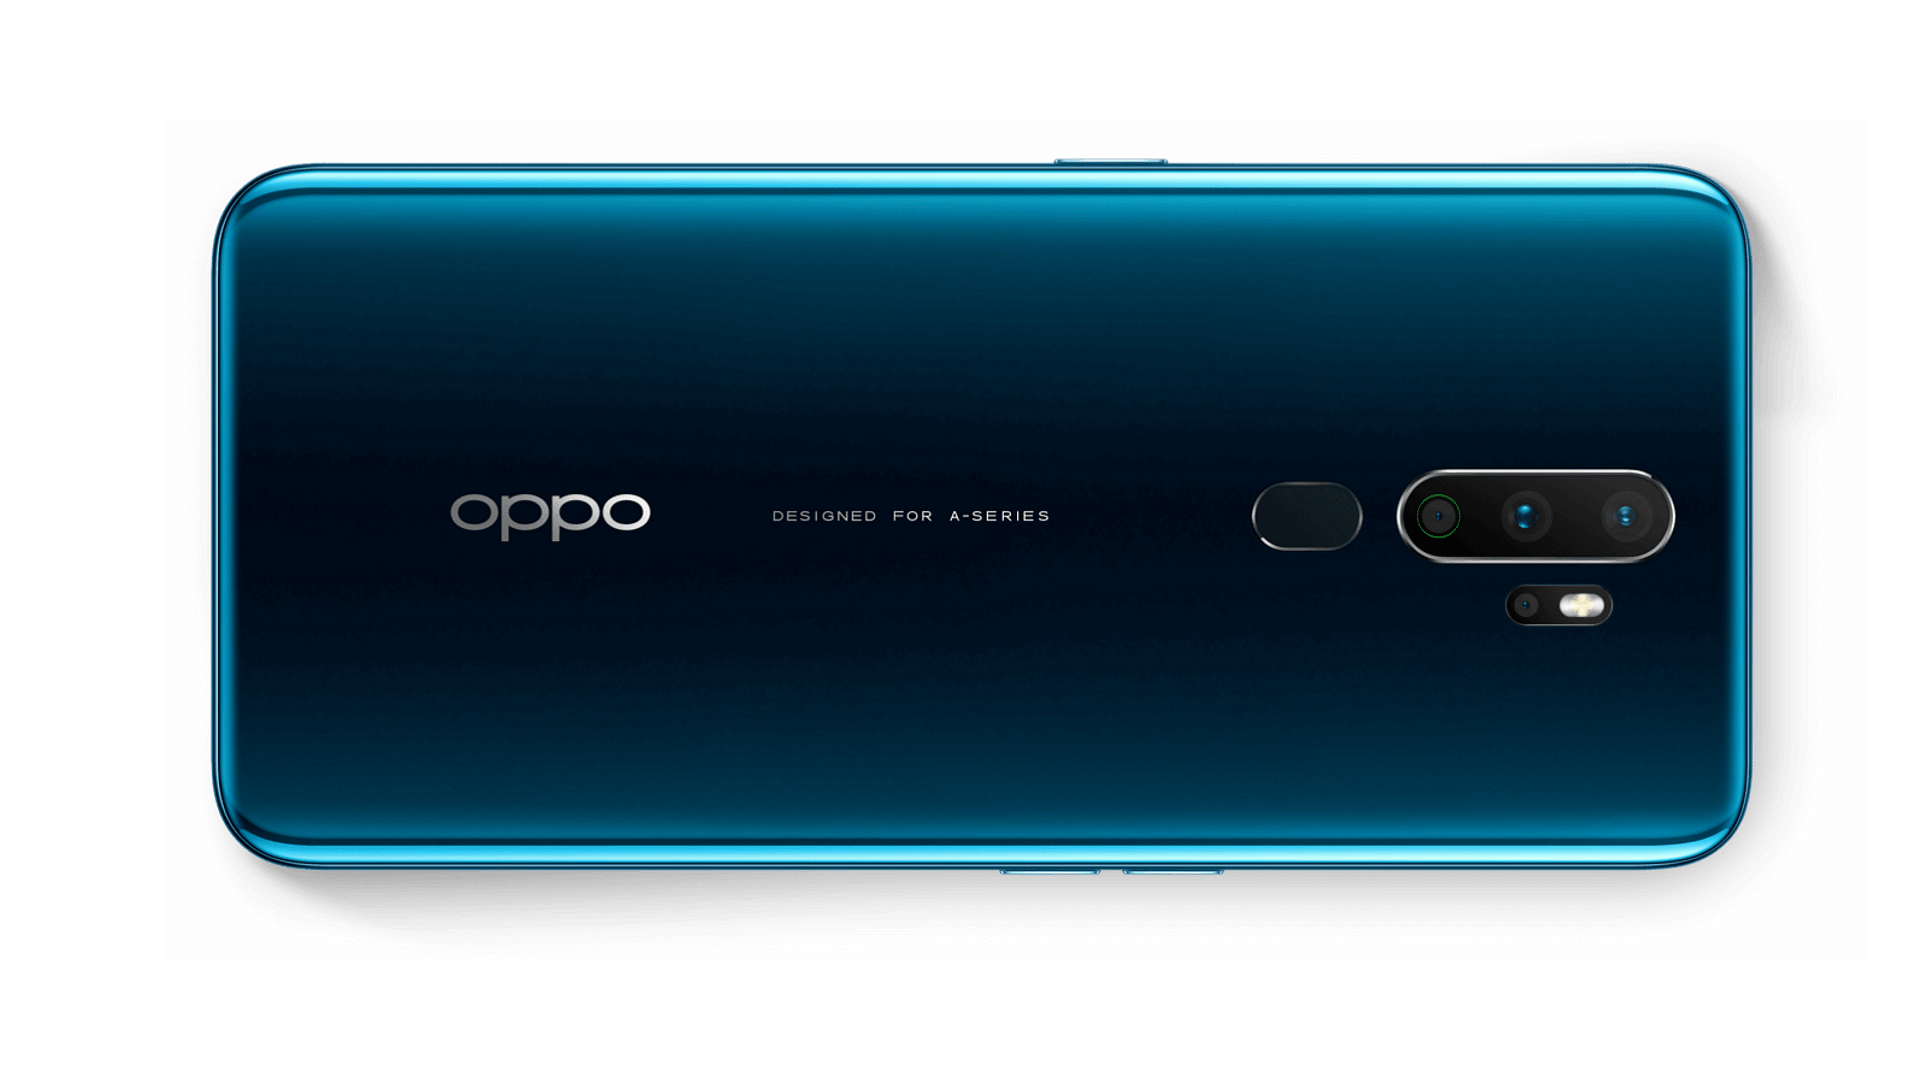 The OPPO A9 2020 has a quad camera set-up